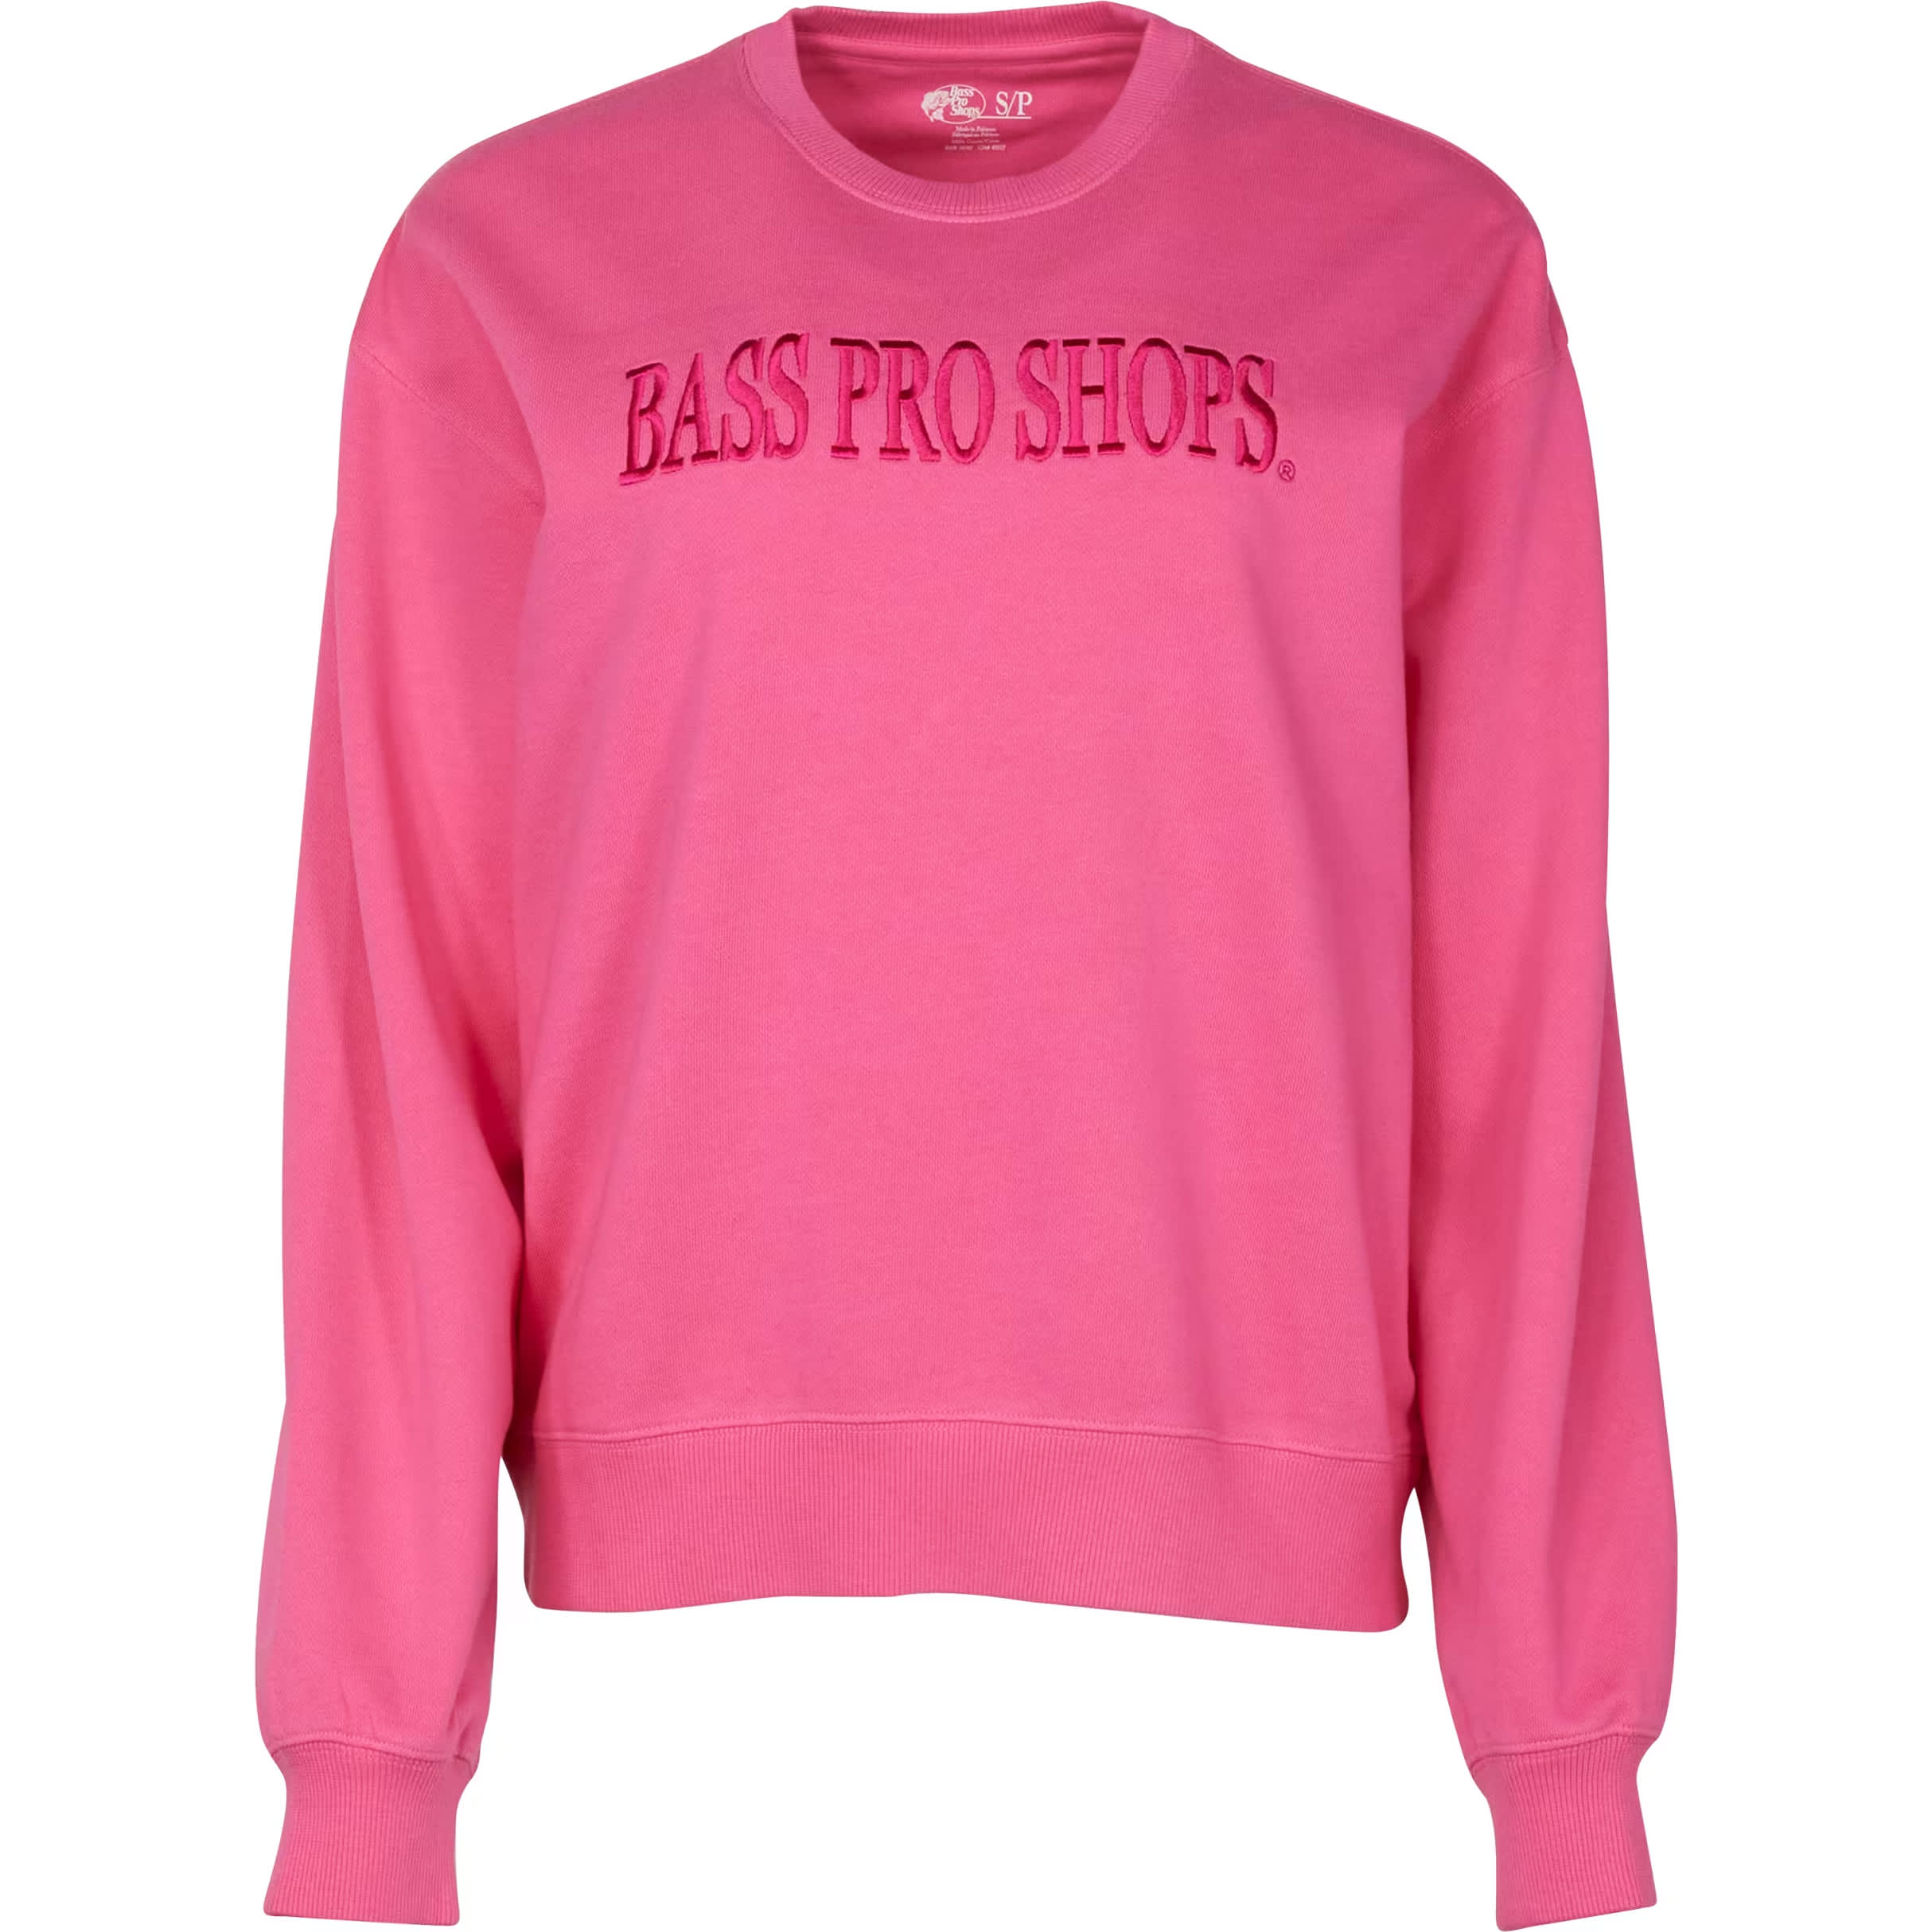 Bass Pro Shops® Women’s Long-Sleeve Logo Sweatshirt